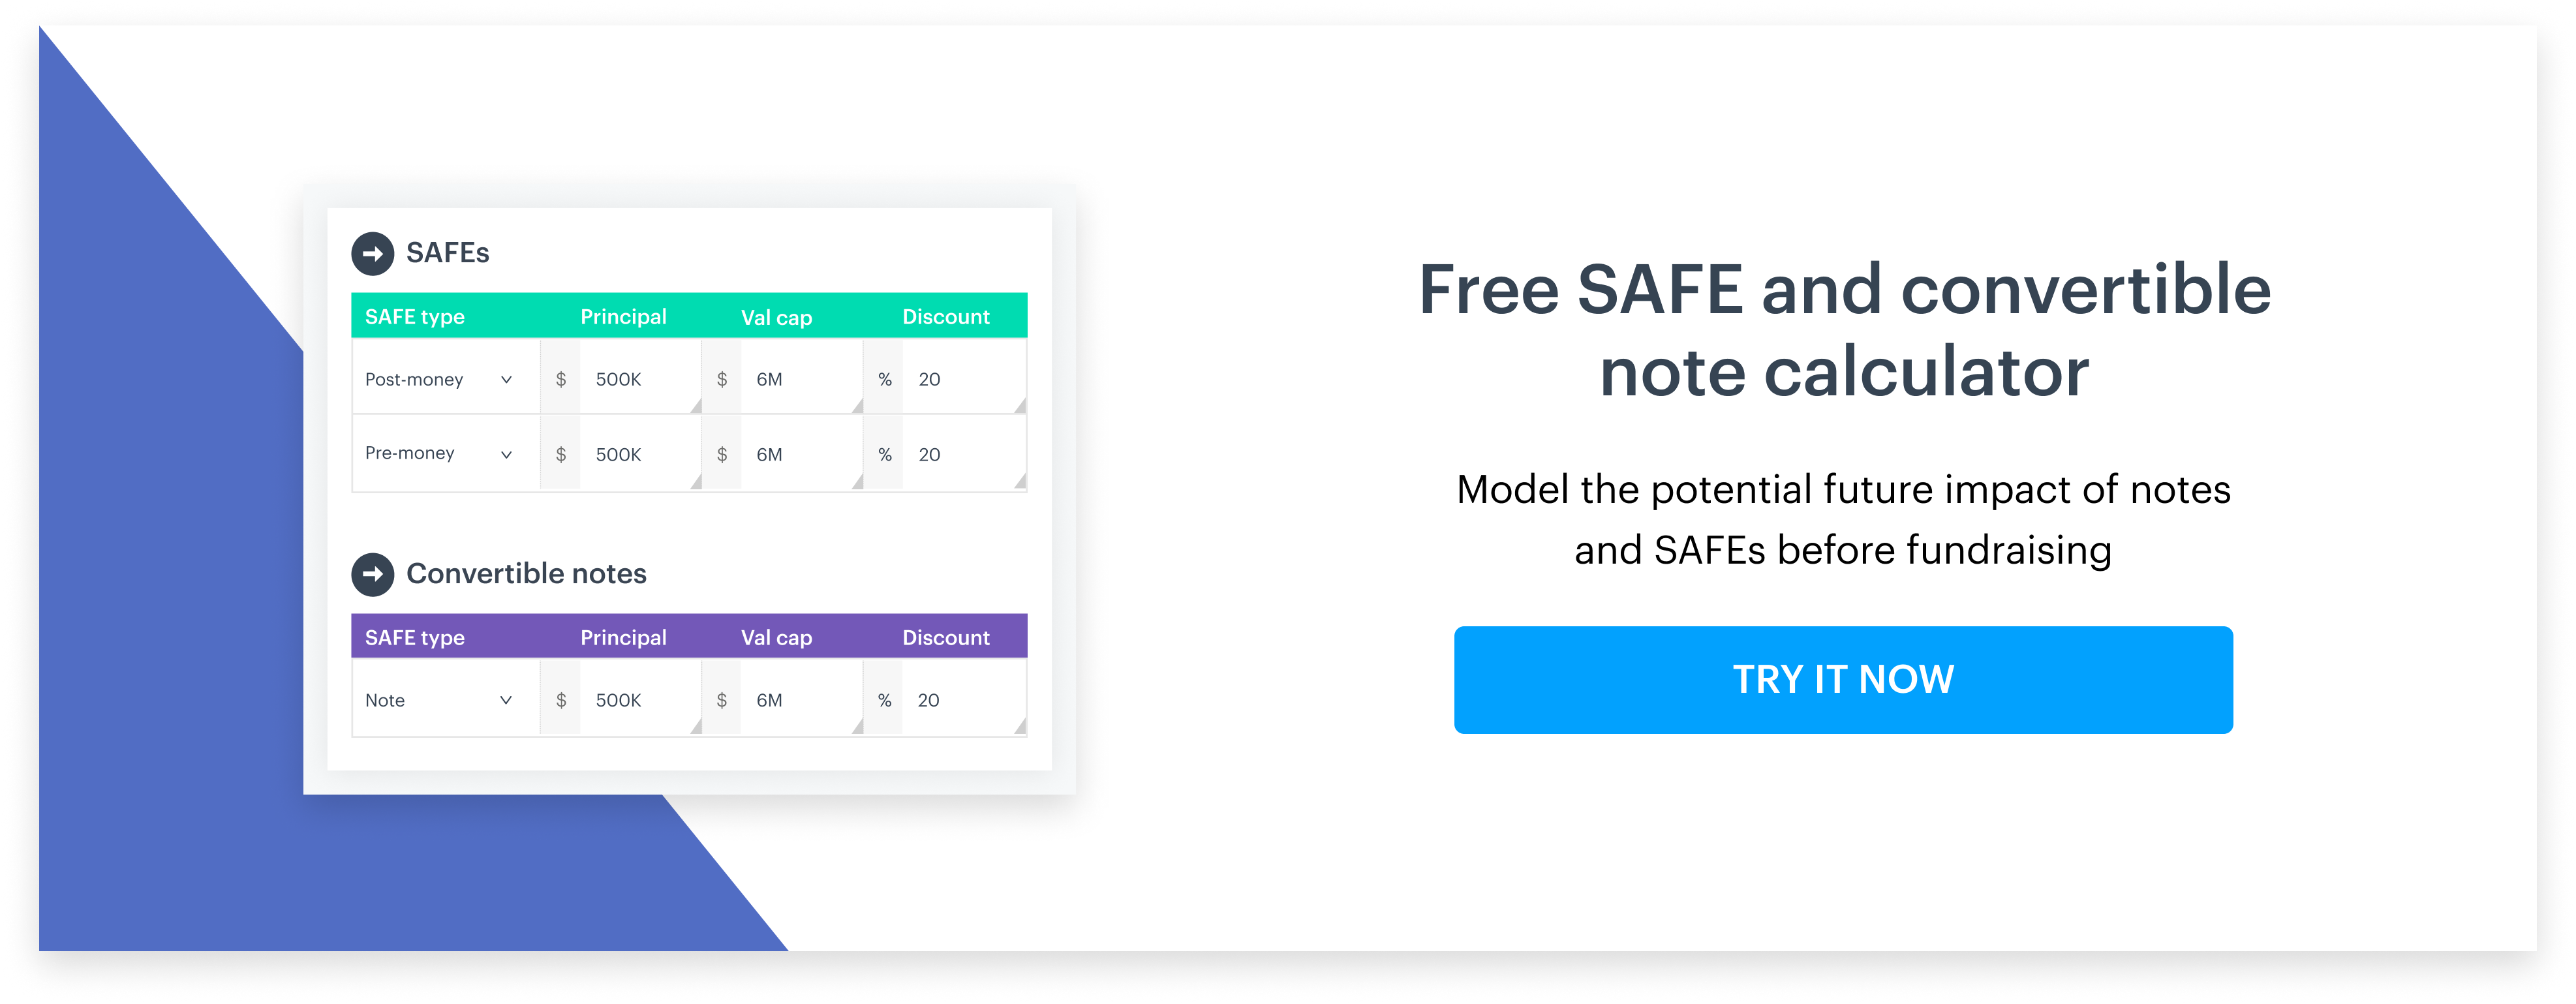 Introducing Carta’s SAFE and convertible note calculator 2